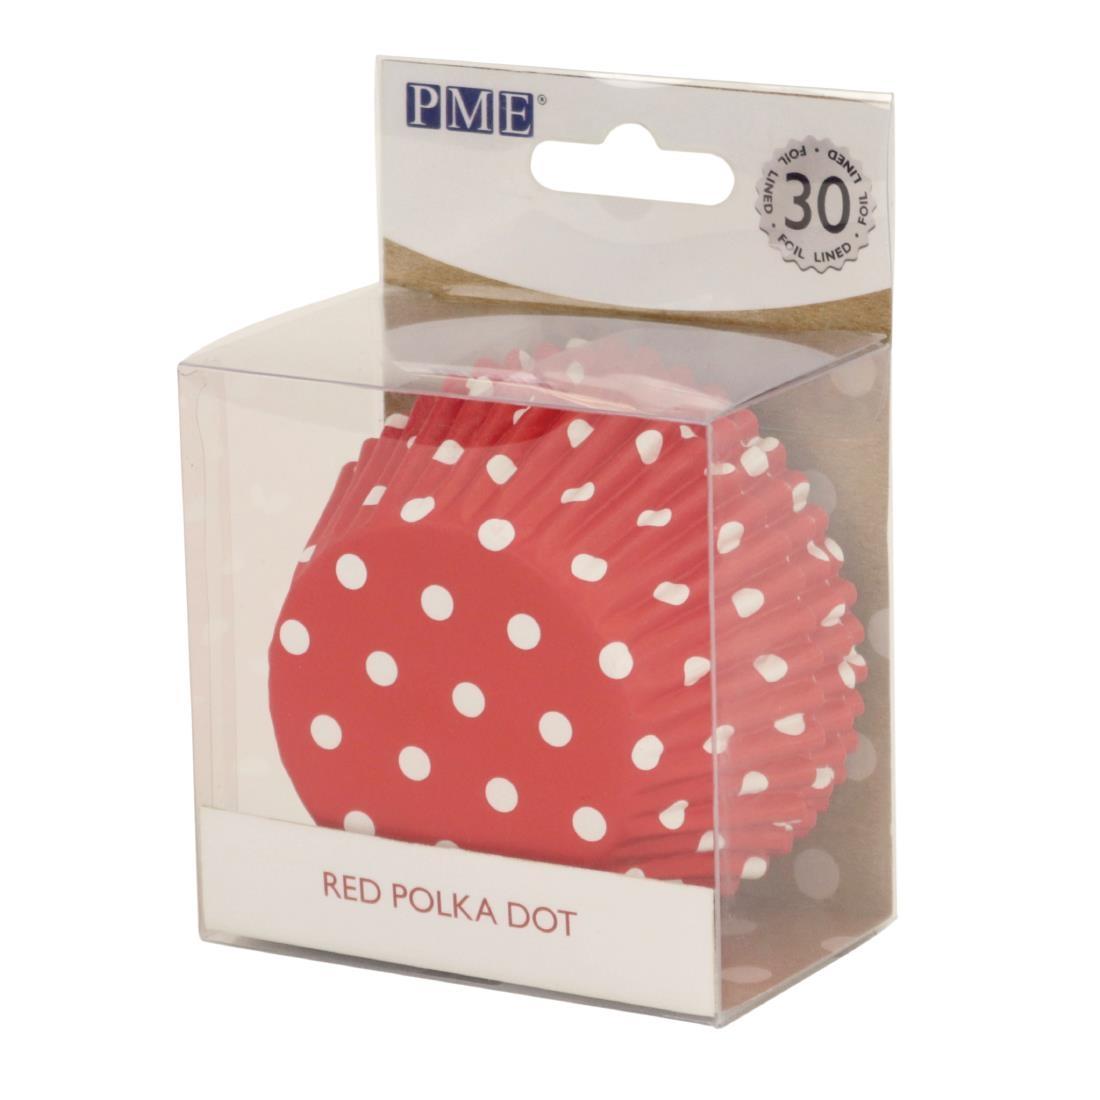 PME Cupcake Foil Lined Baking Cases Polka Dot (Pack of 30) - GE849  - 5